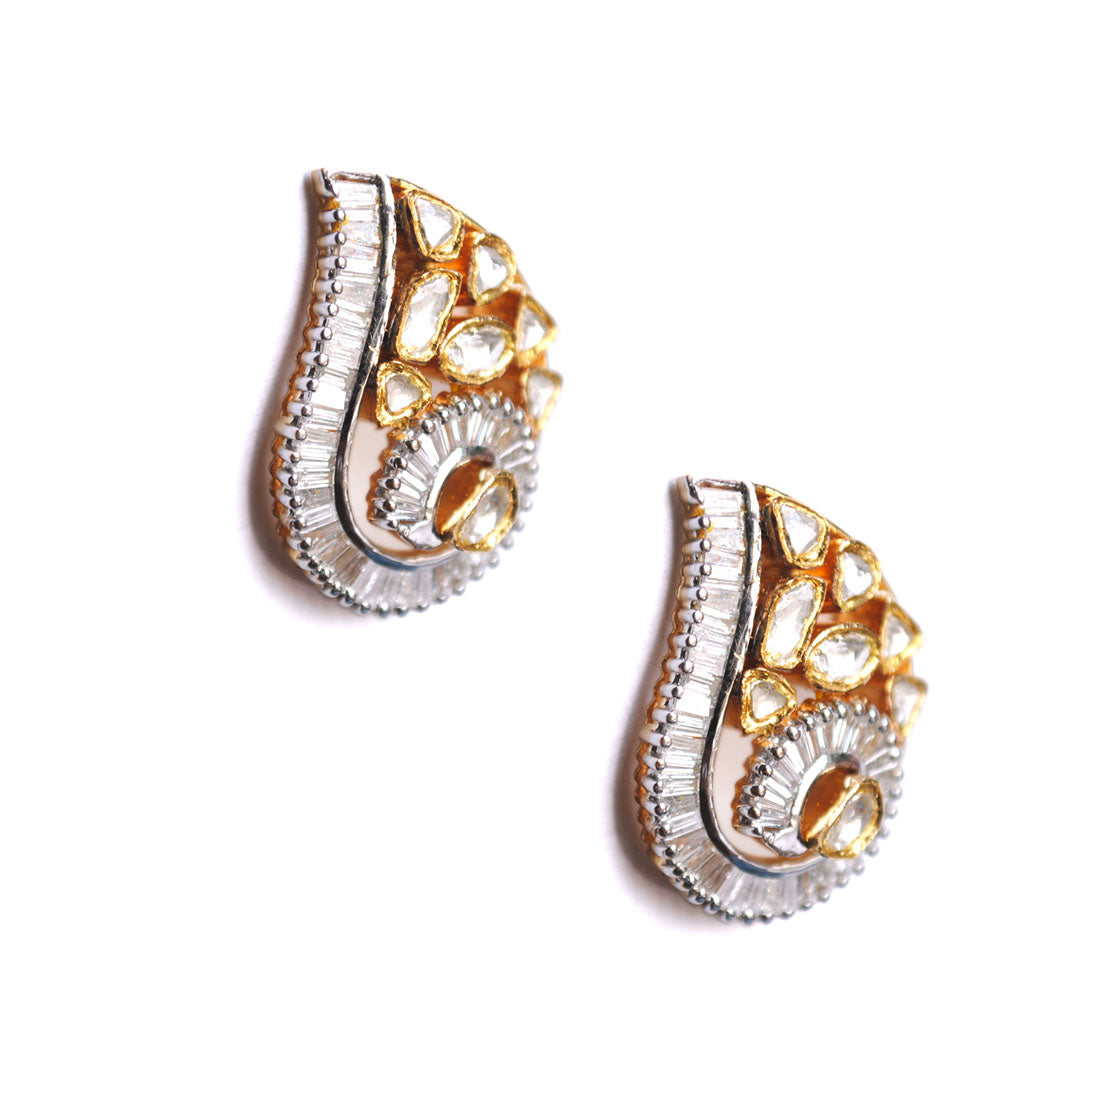 Hira Panna 18k Sparkling Star Diamond Earrings - Hira Panna Jewellers